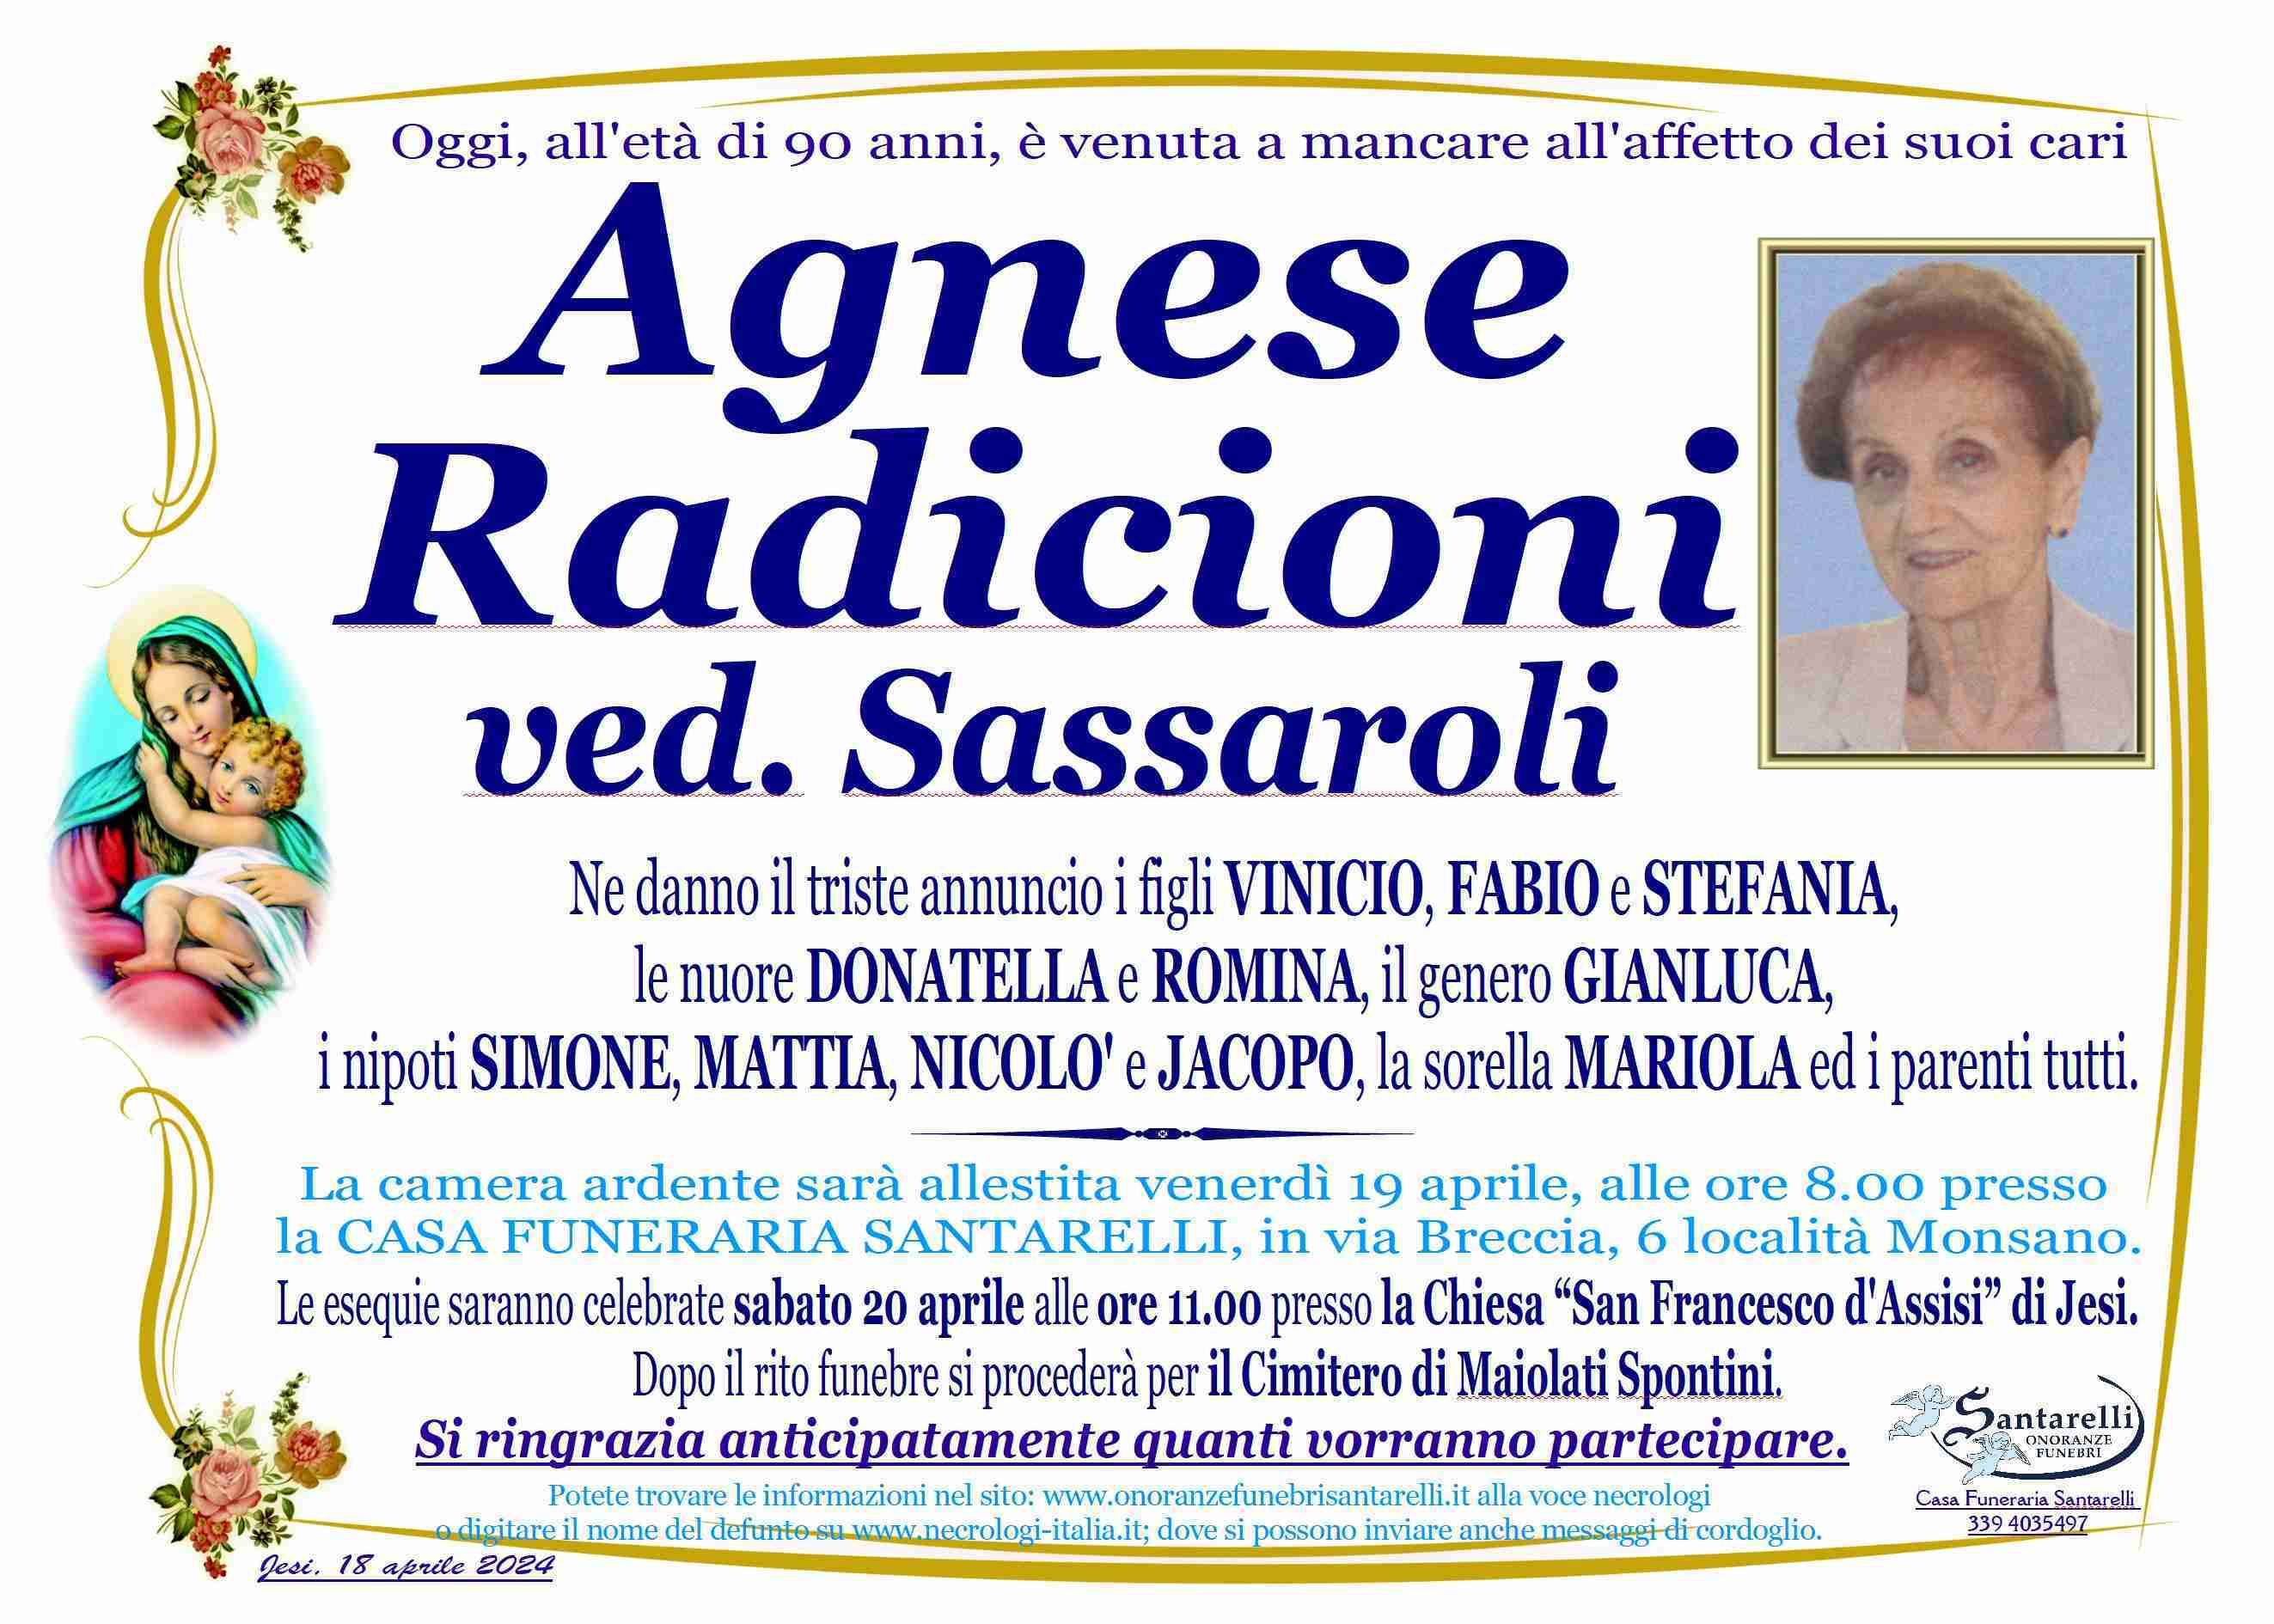 Agnese Radicioni